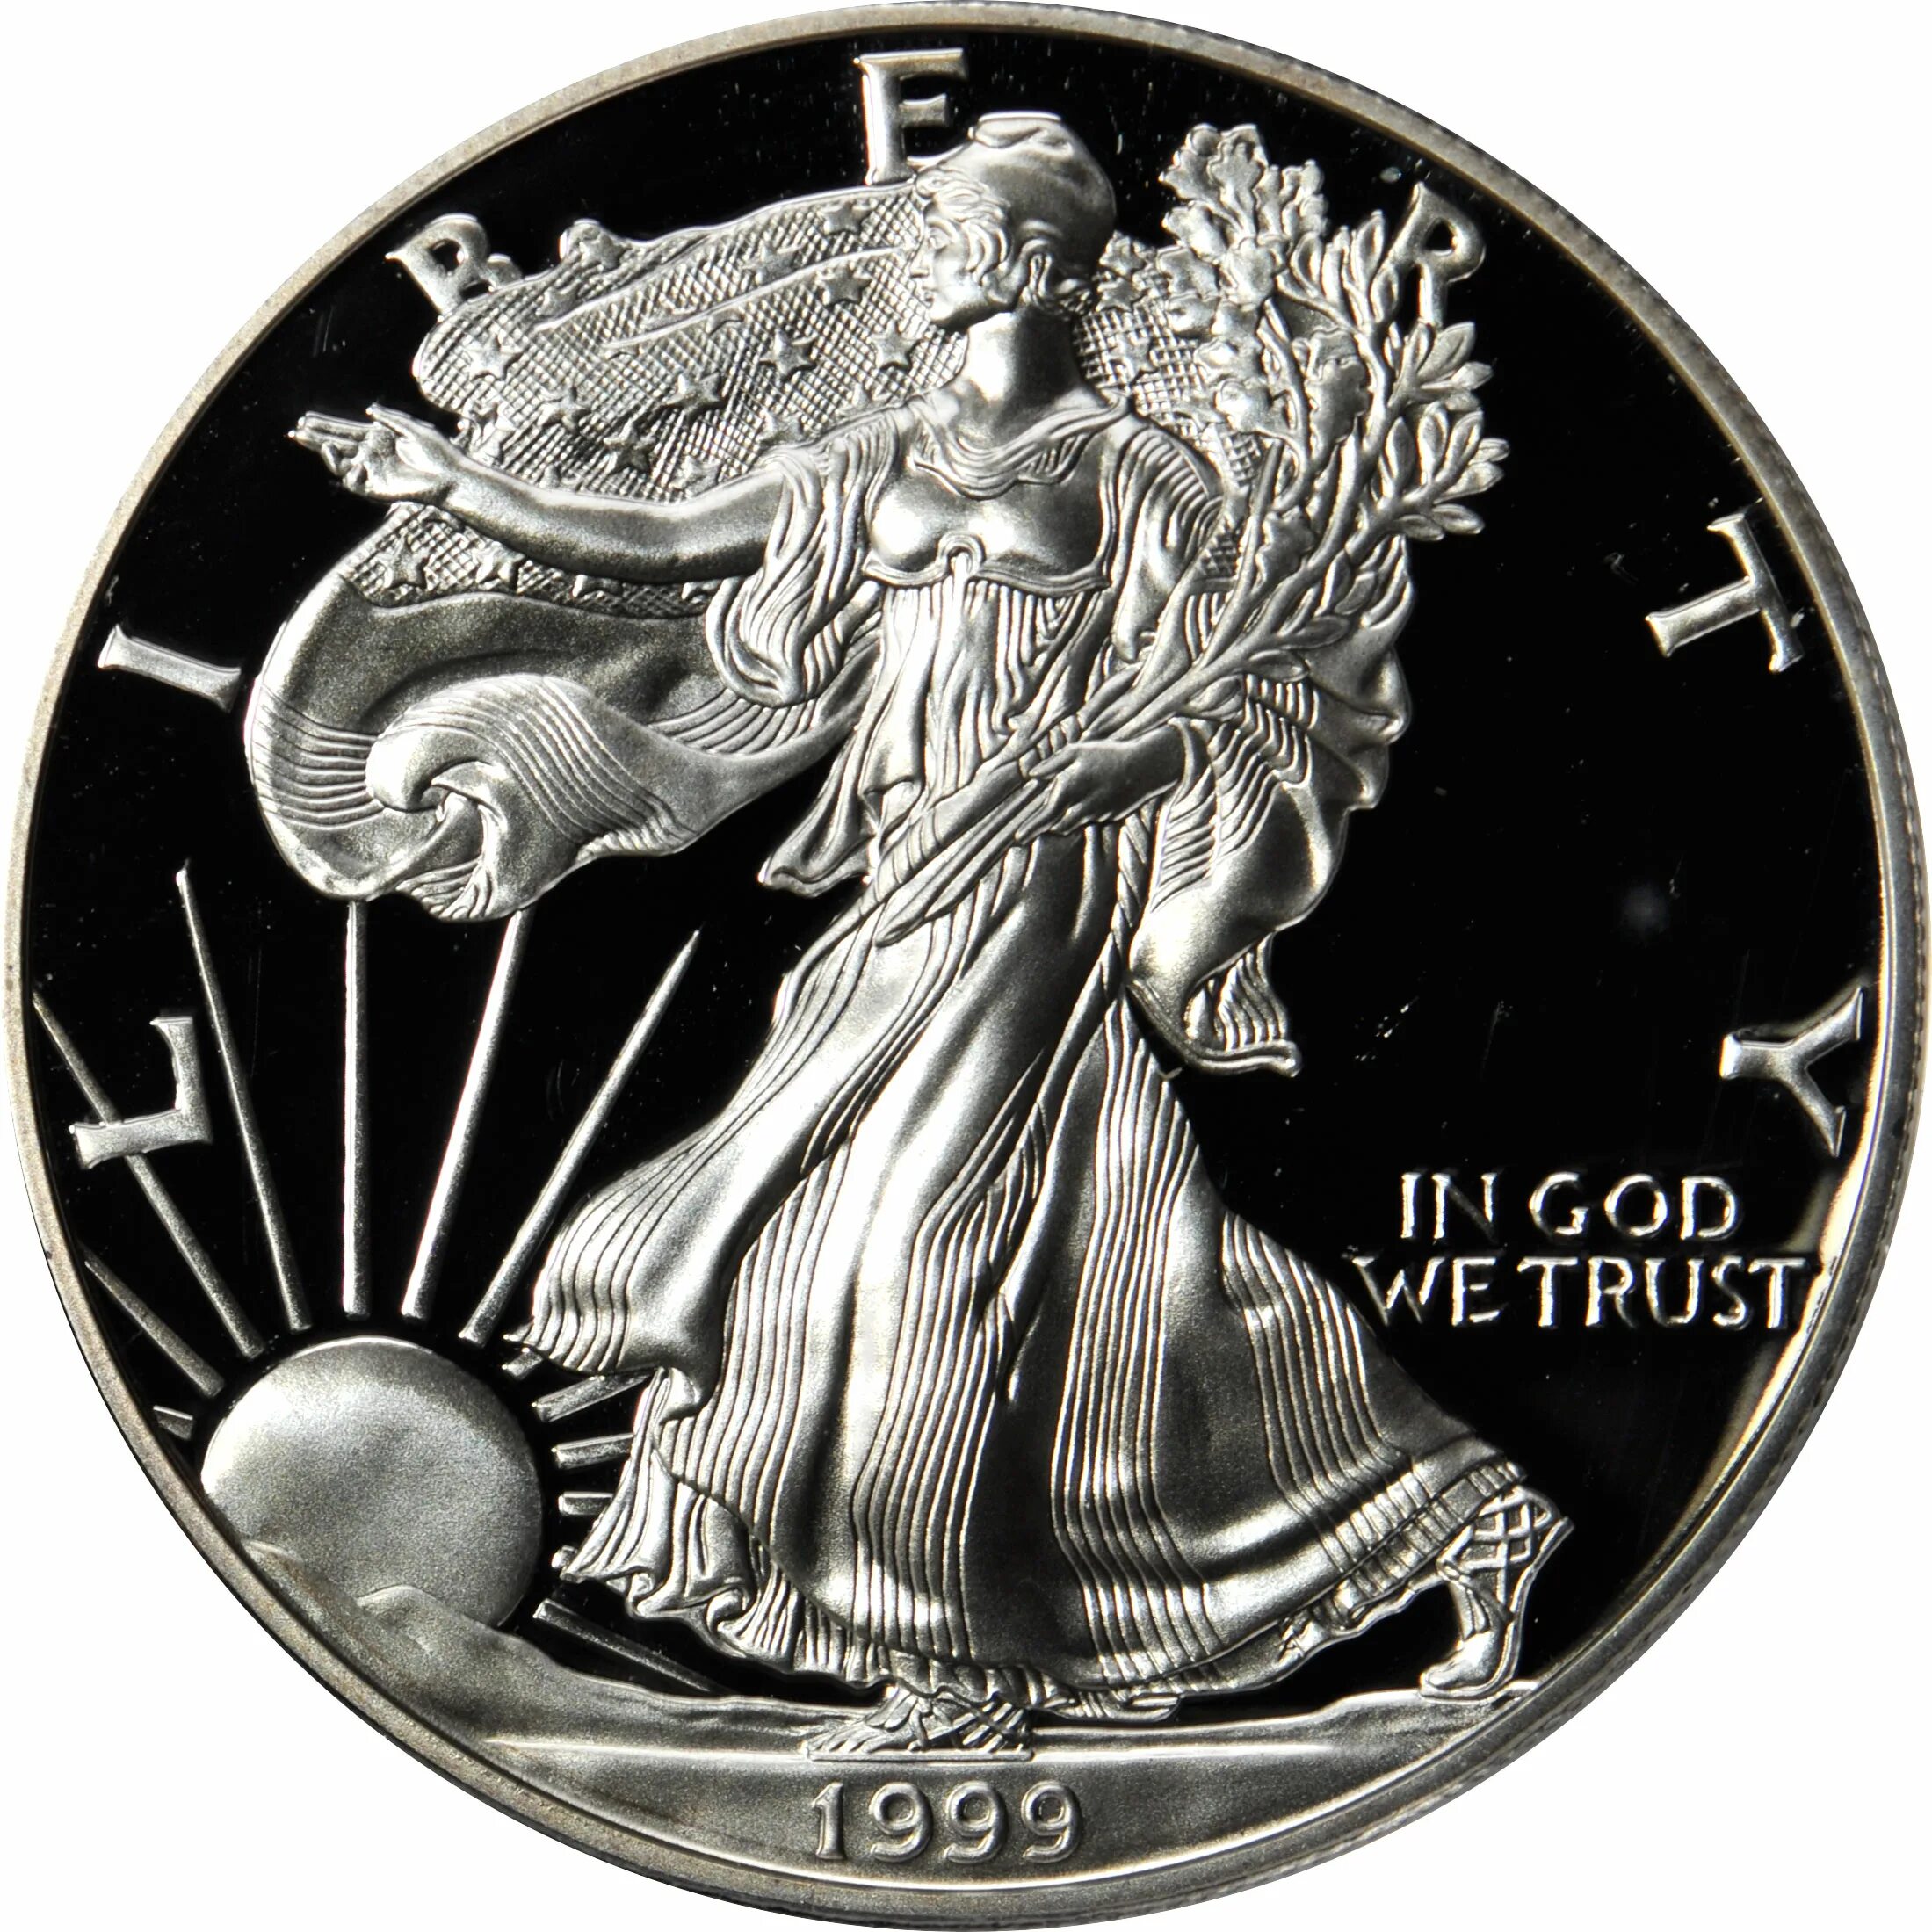 Silver Dollar's монета. Монета 1 доллар США серебро. Серебряный доллар. Американские серебряные монеты. Доллар серебро купить